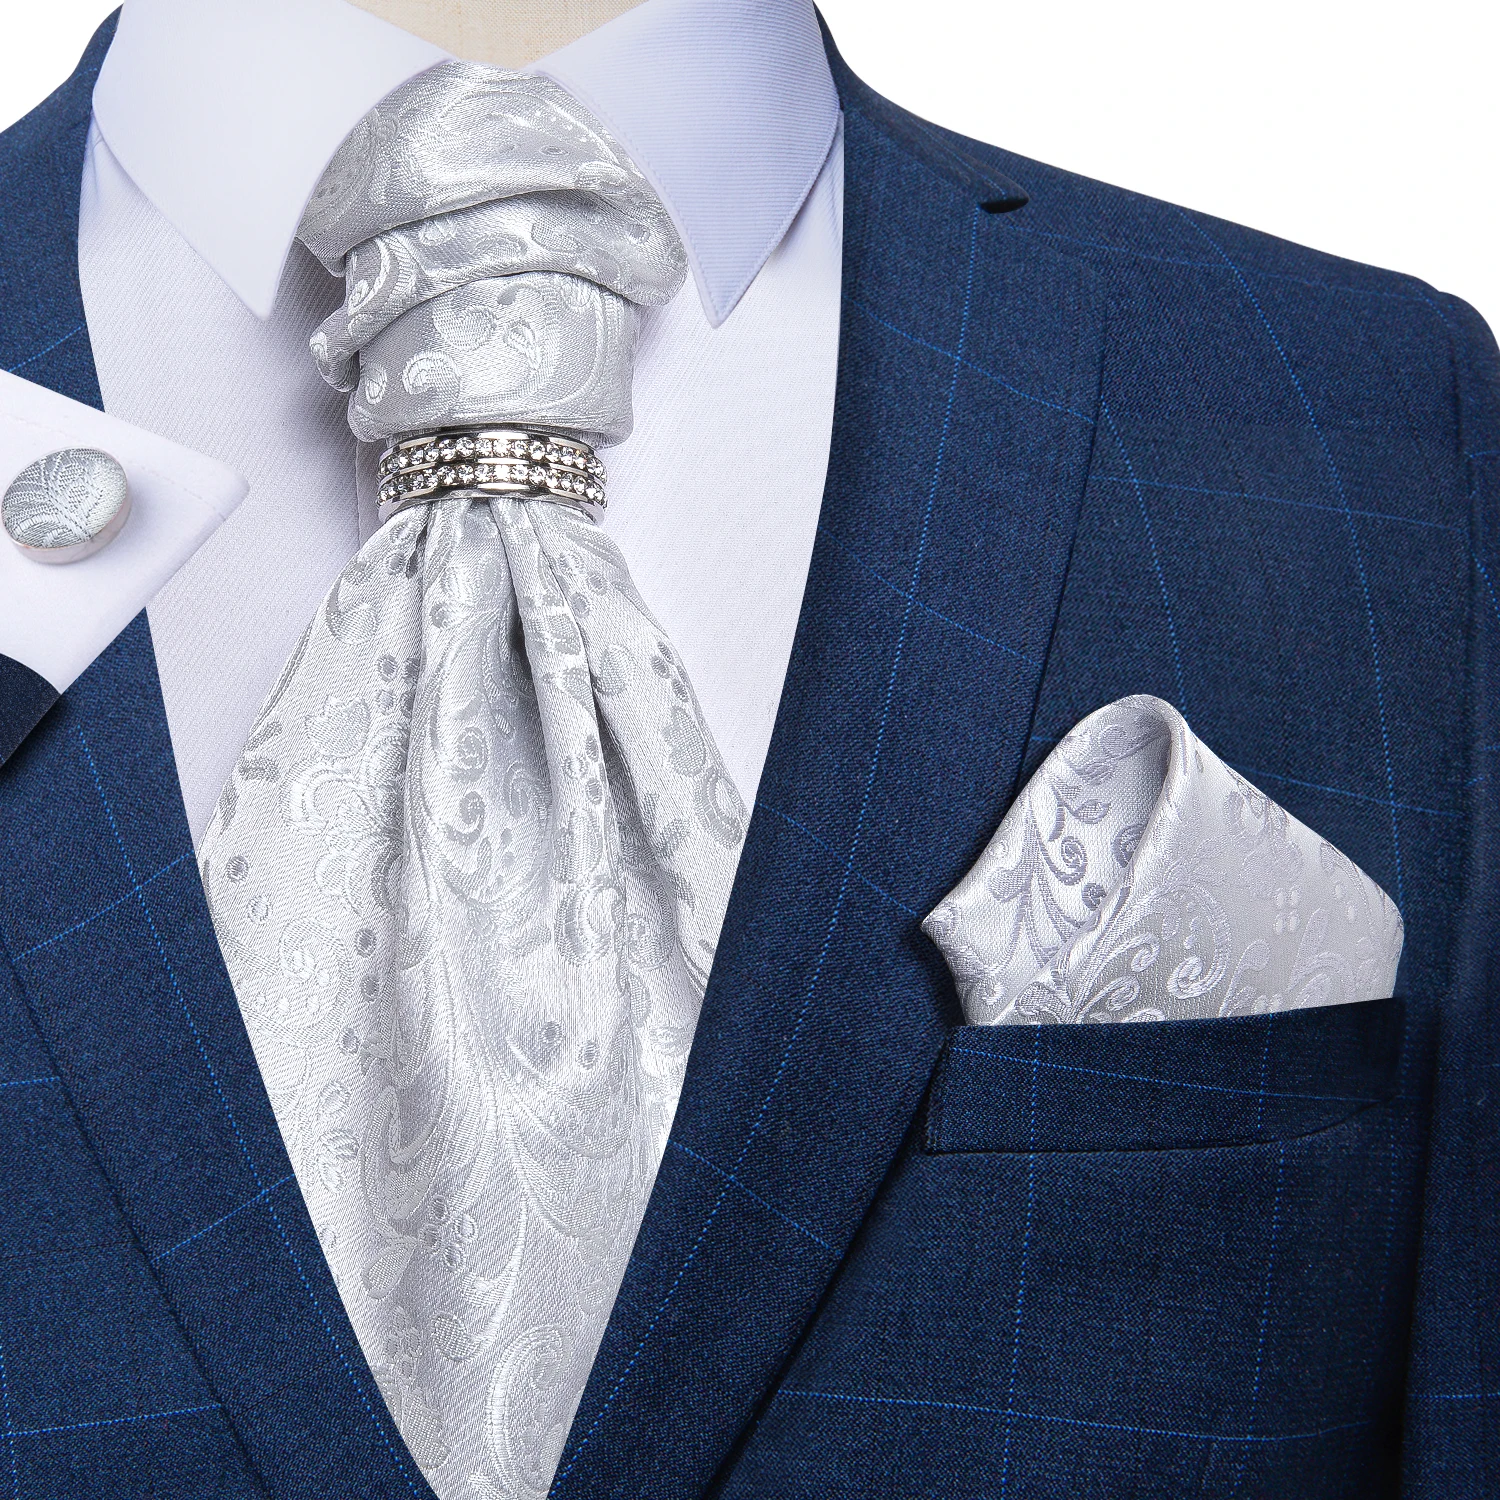 Details about   New Vesuvio Napoli Men's Polyester Ascot Cravat Necktie Hankie Paisley Silver 